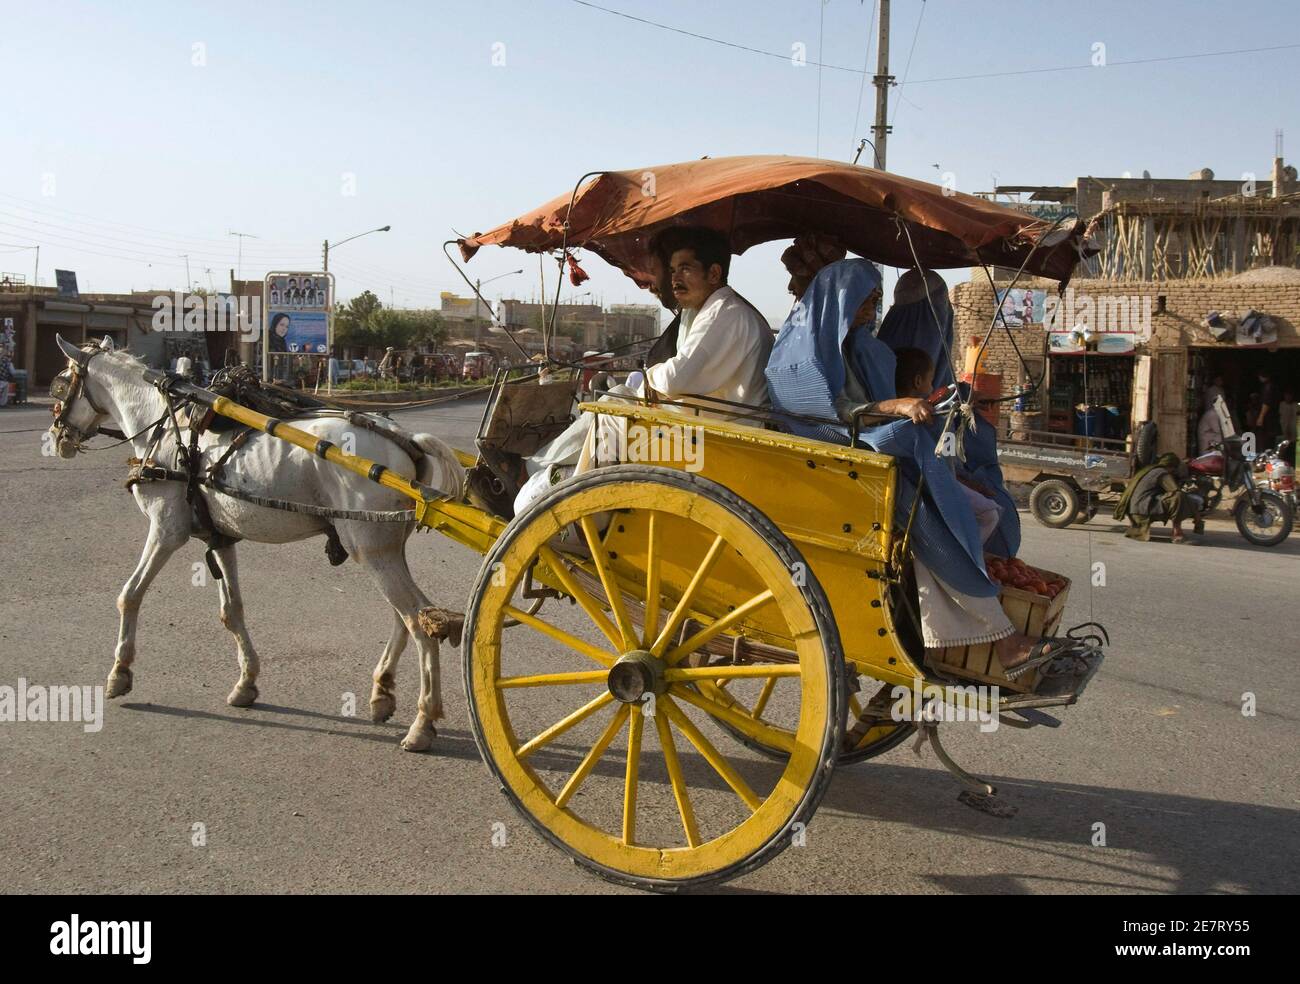 Passengers ride in a horse-drawn carriage in Herat, western Afghanistan August 11, 2009. REUTERS/Raheb Homavandi (AFGHANISTAN SOCIETY) Stock Photo